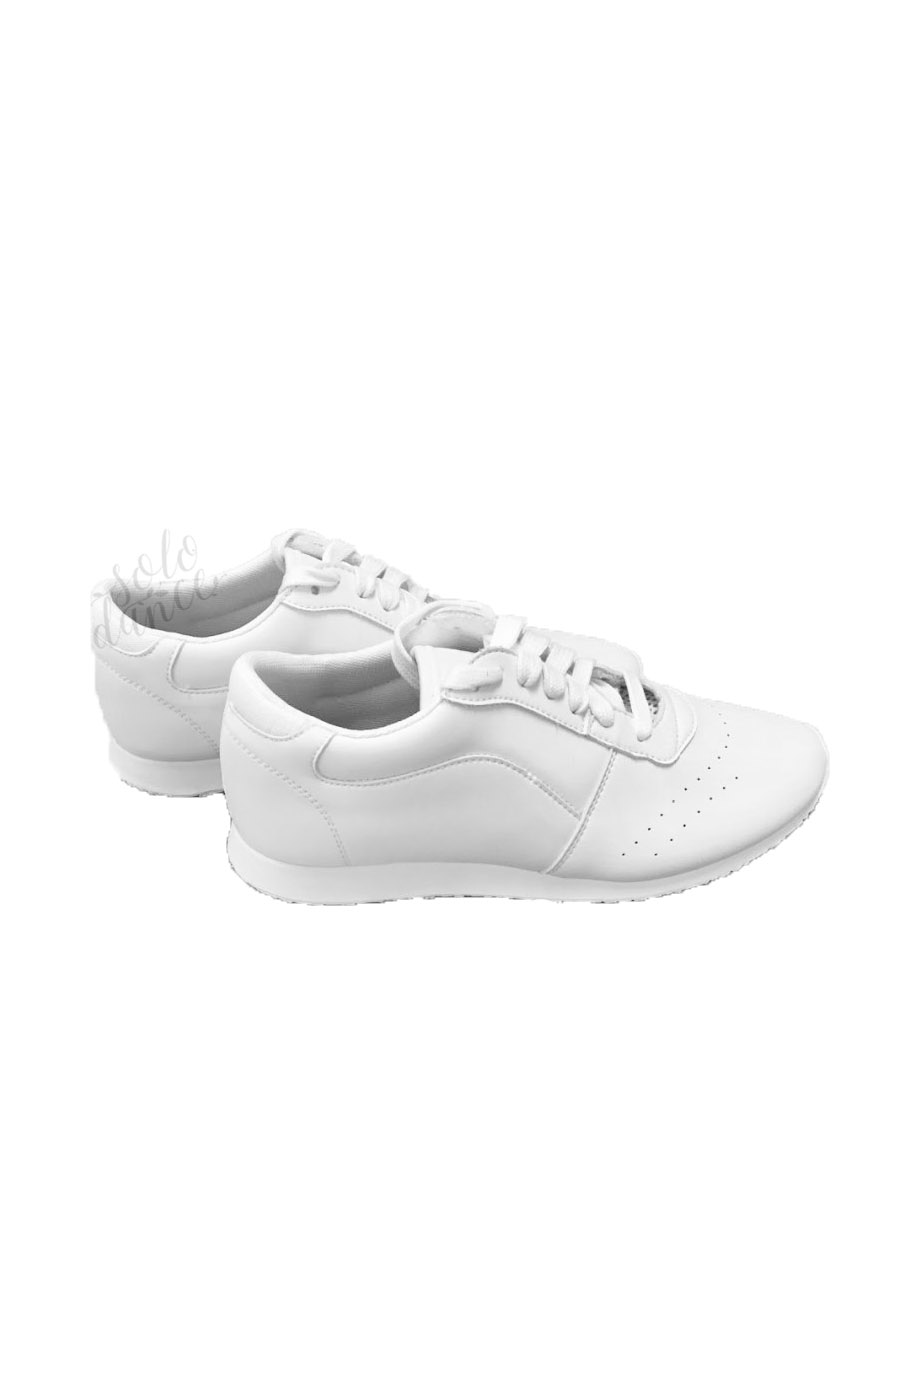 Aerobic shoes VENTURELLI  AER8 FIT white size 36